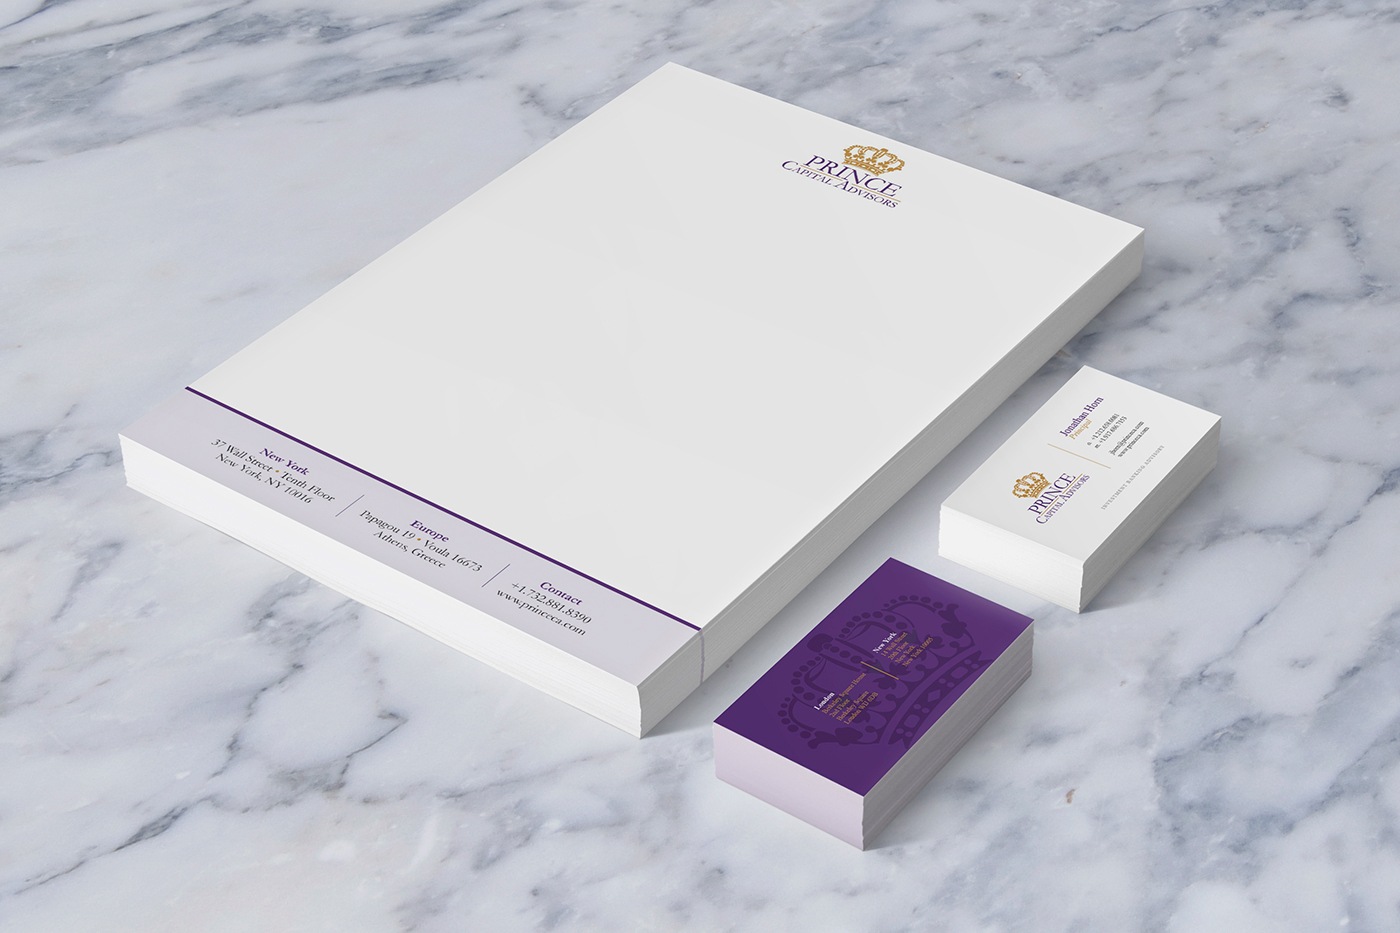 Investment banking Advisors solari creative prince crown purple royal wordpress Stationery letterhead Business Cards